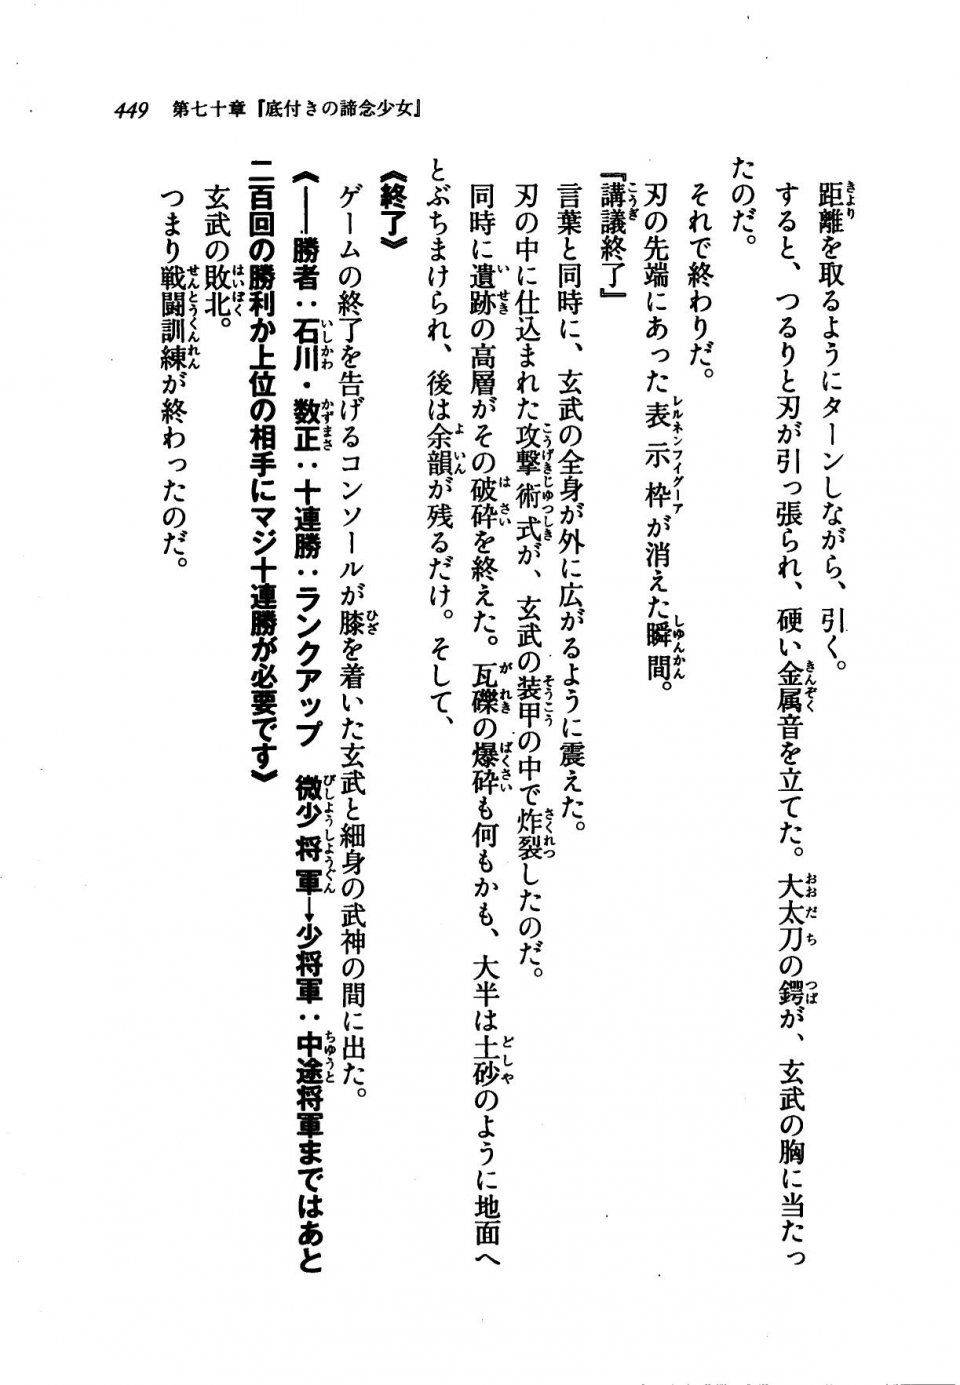 Kyoukai Senjou no Horizon LN Vol 21(8C) Part 1 - Photo #448